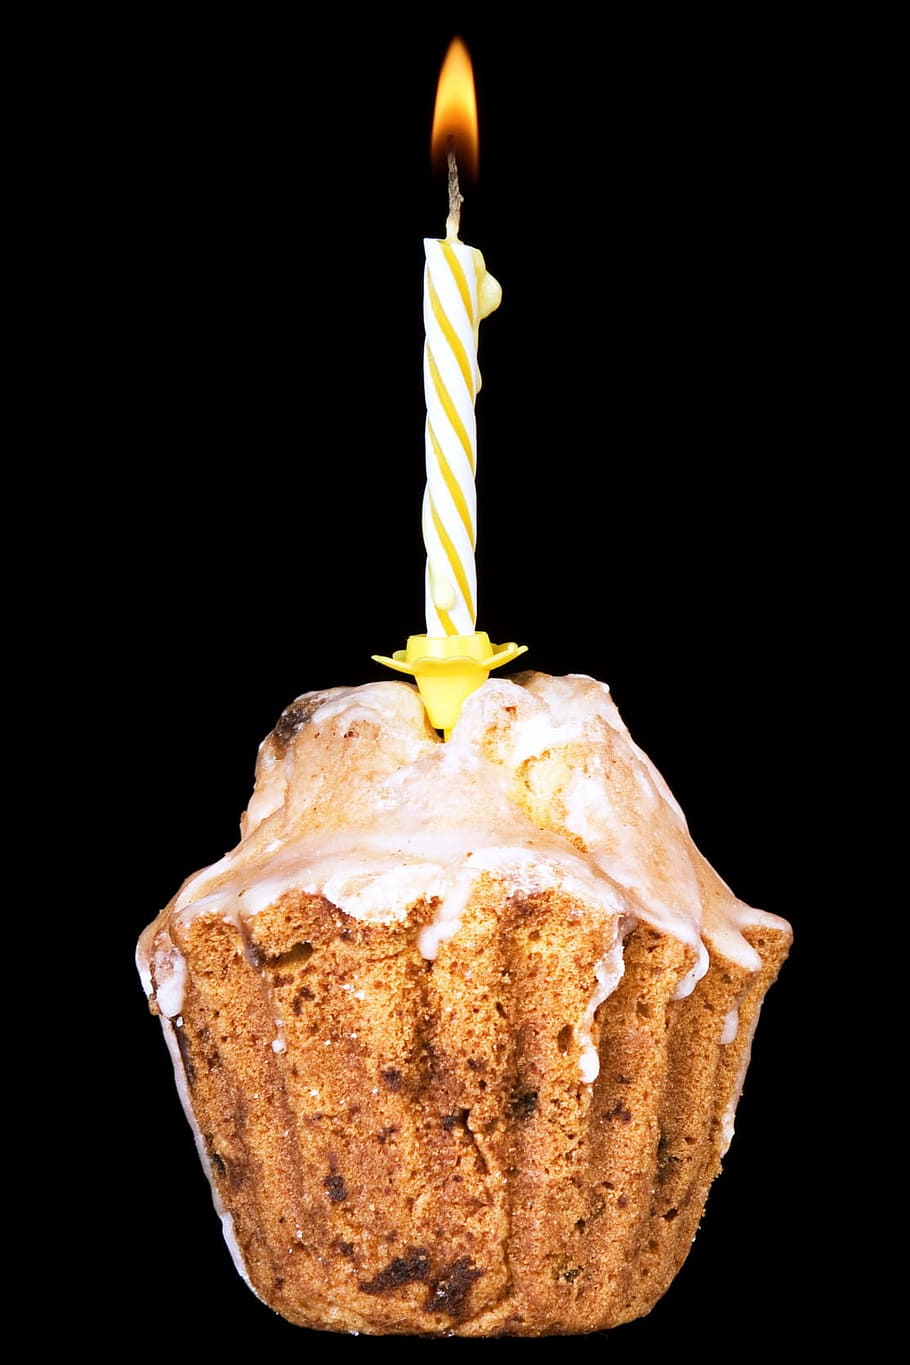 aniversário, preto, fundo, bolo, cupcake, isolado, ninguém, sobremesa, doce, lanche